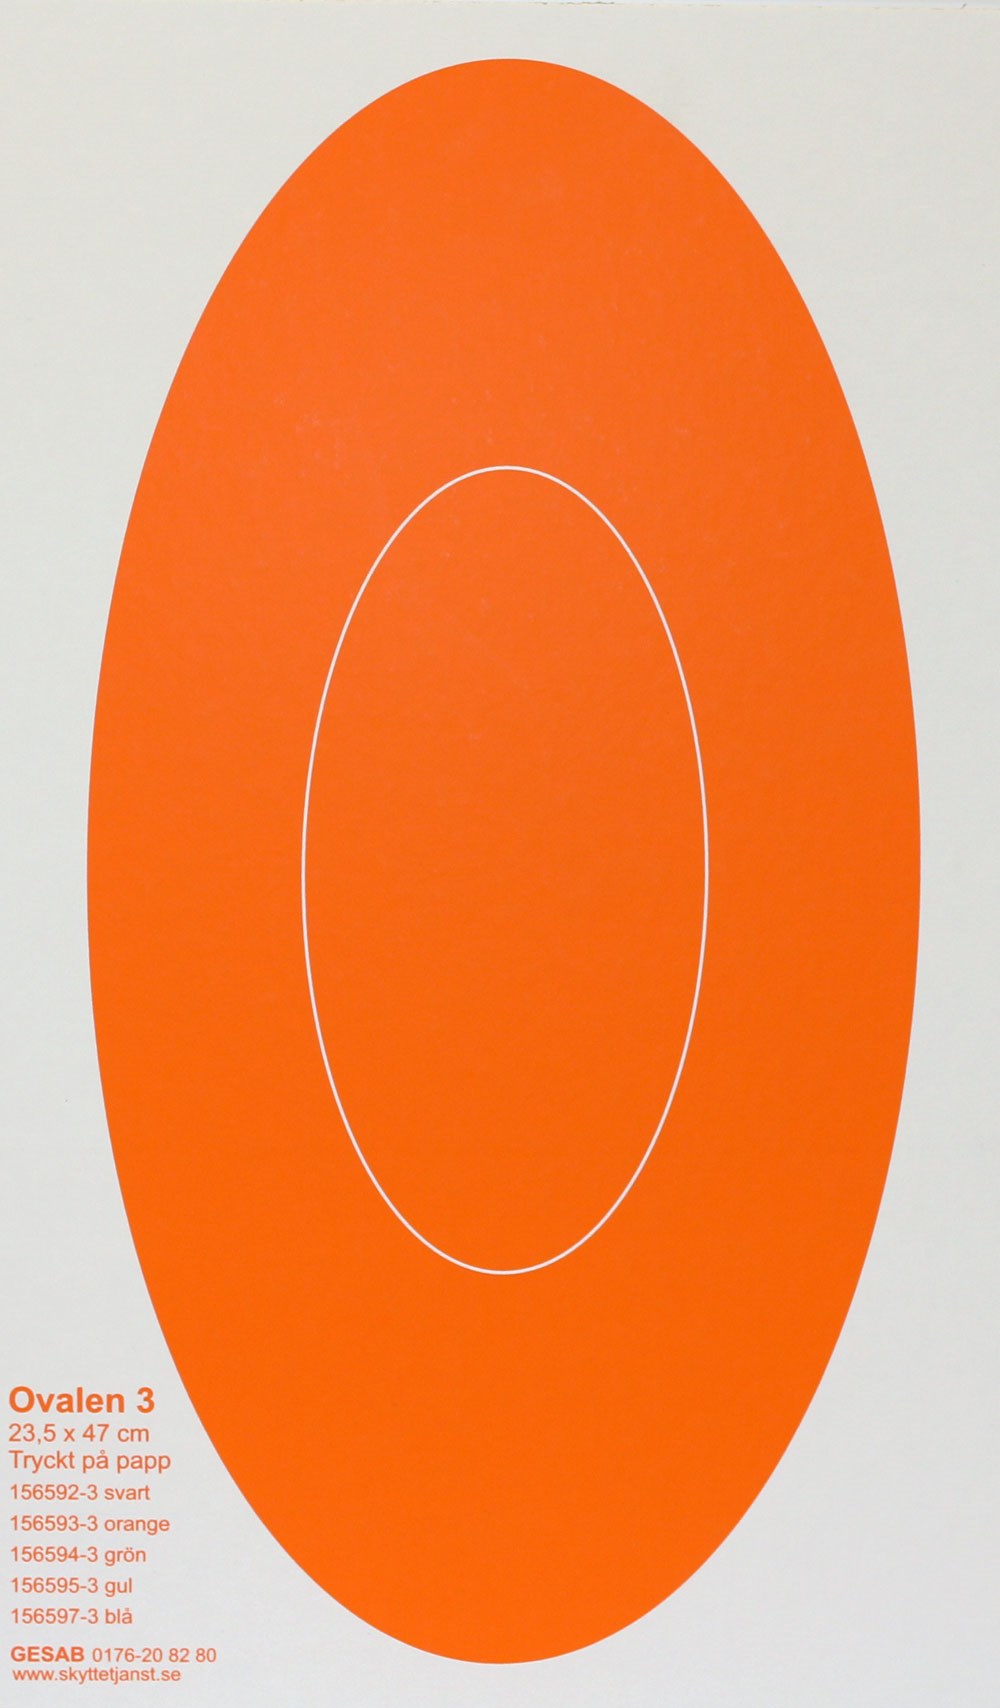 Ovalen nr 3 orange, 23,5 x 47 cm